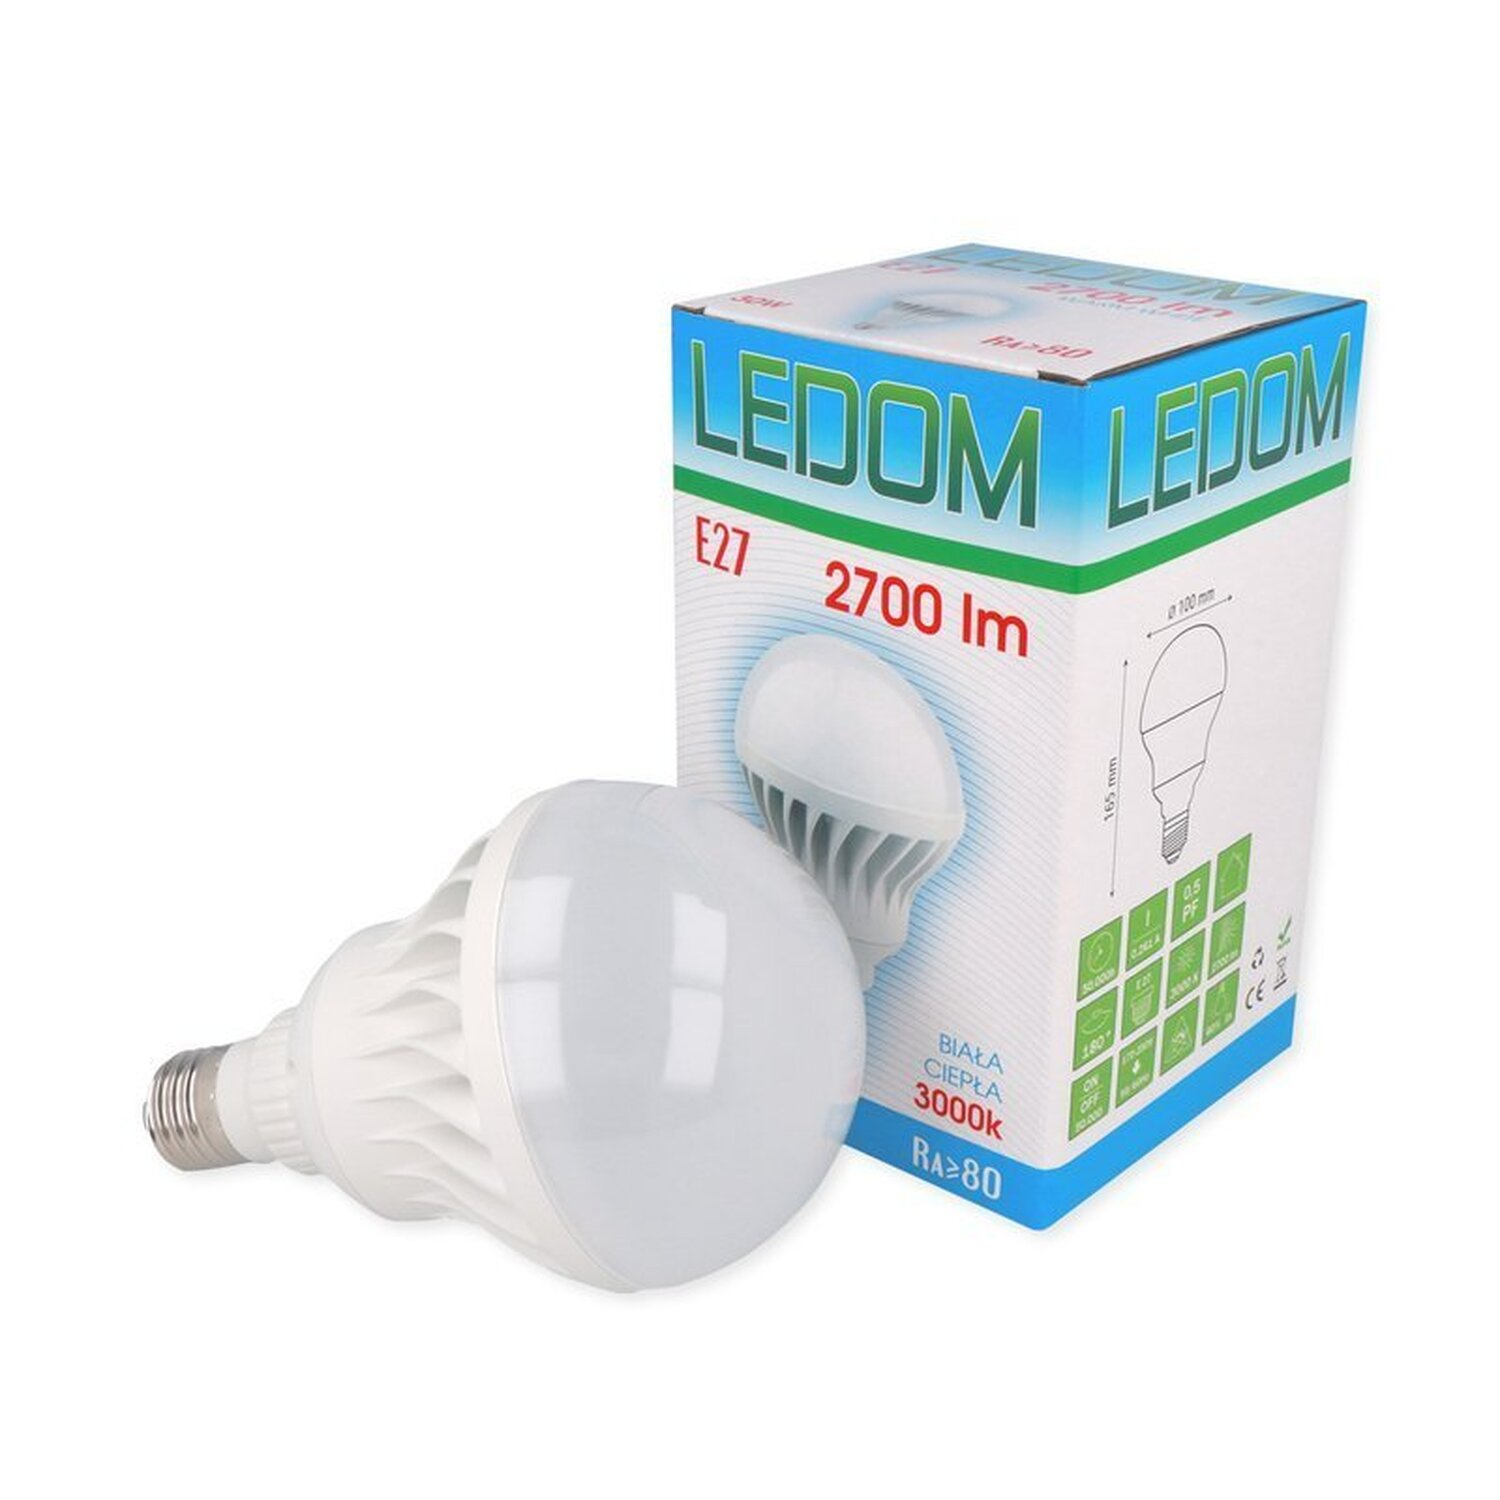 2700 Ceramic LINE E27 LED 10x 30W lm LED LED Leuchtmittel Warmweiß